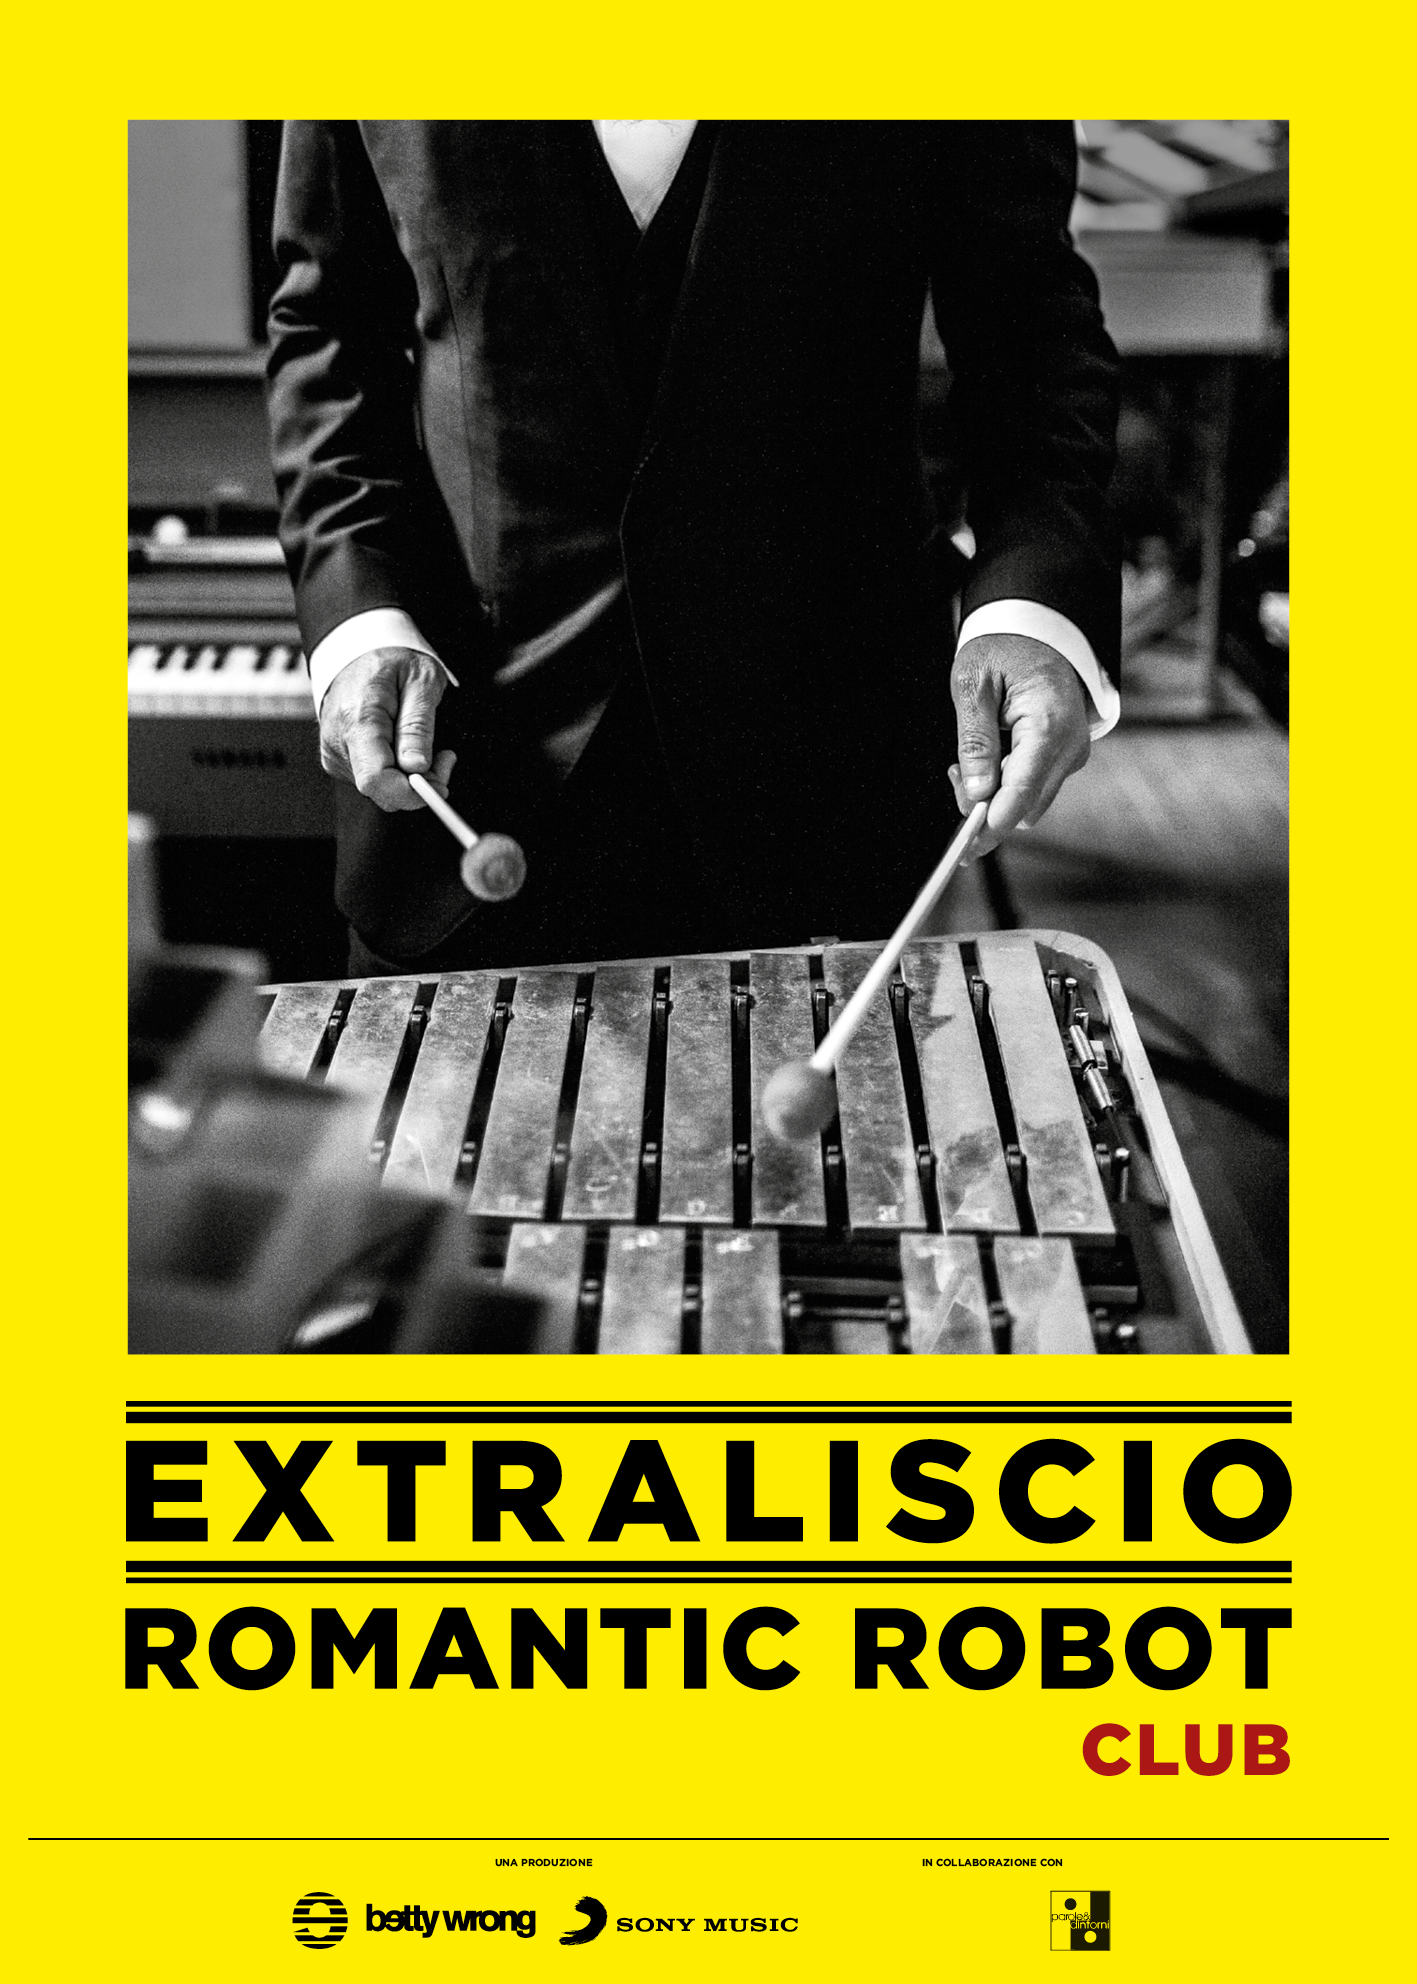 extraliscio romantic robot club